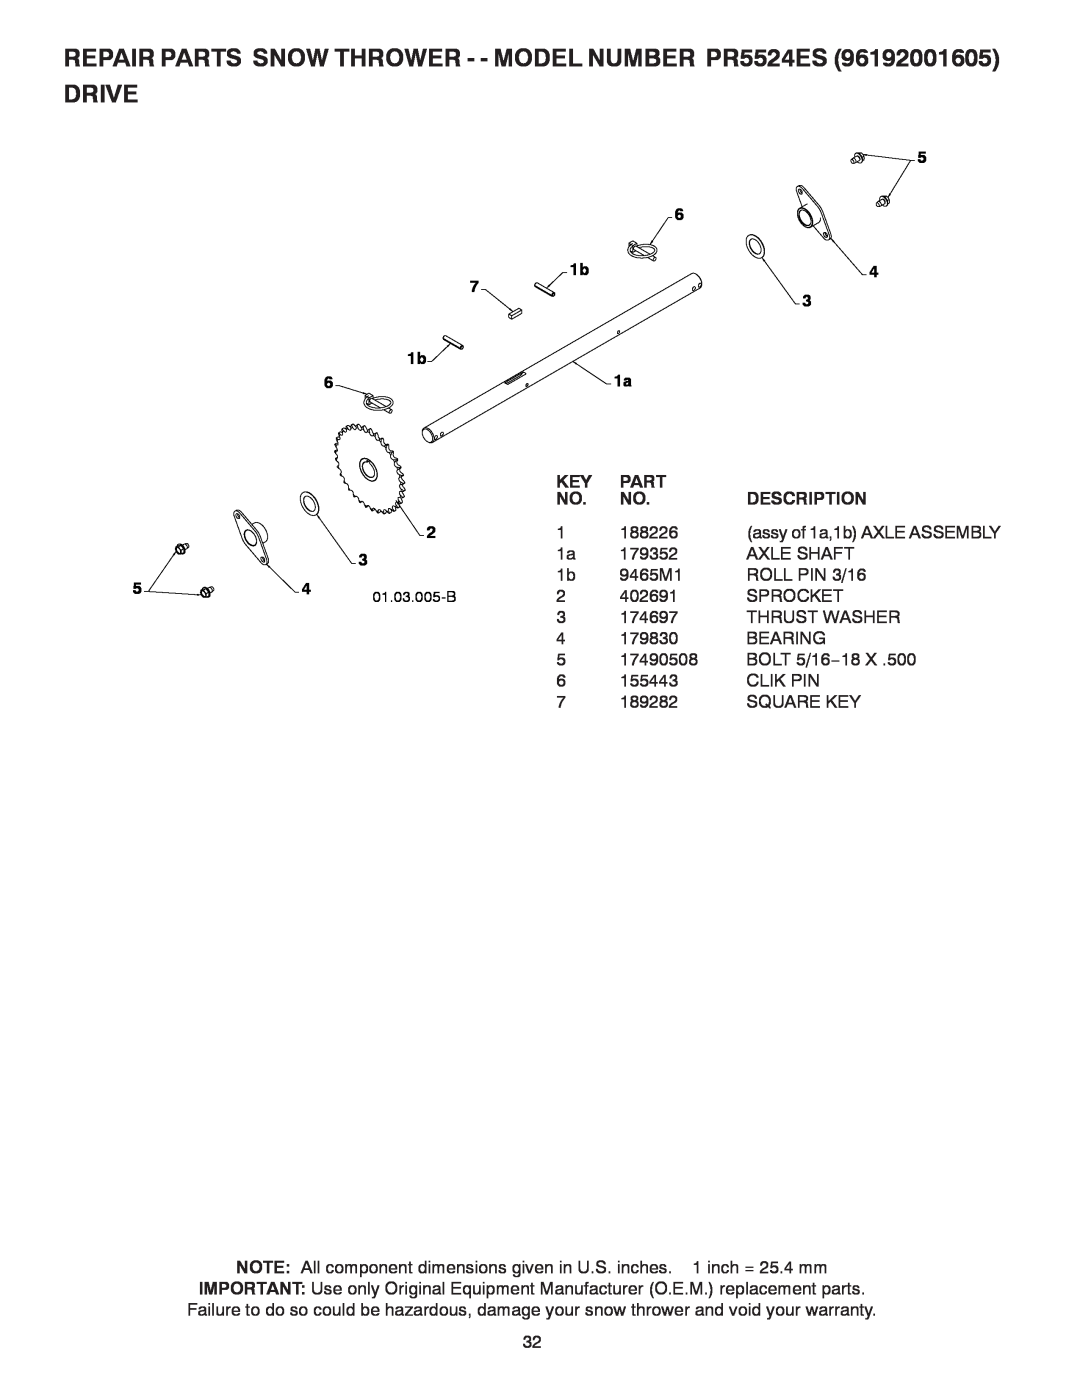 Poulan 421283 REPAIR PARTS SNOW THROWER - - MODEL NUMBER PR5524ES DRIVE, Part, Description, assy of 1a,1b AXLE ASSEMBLY 